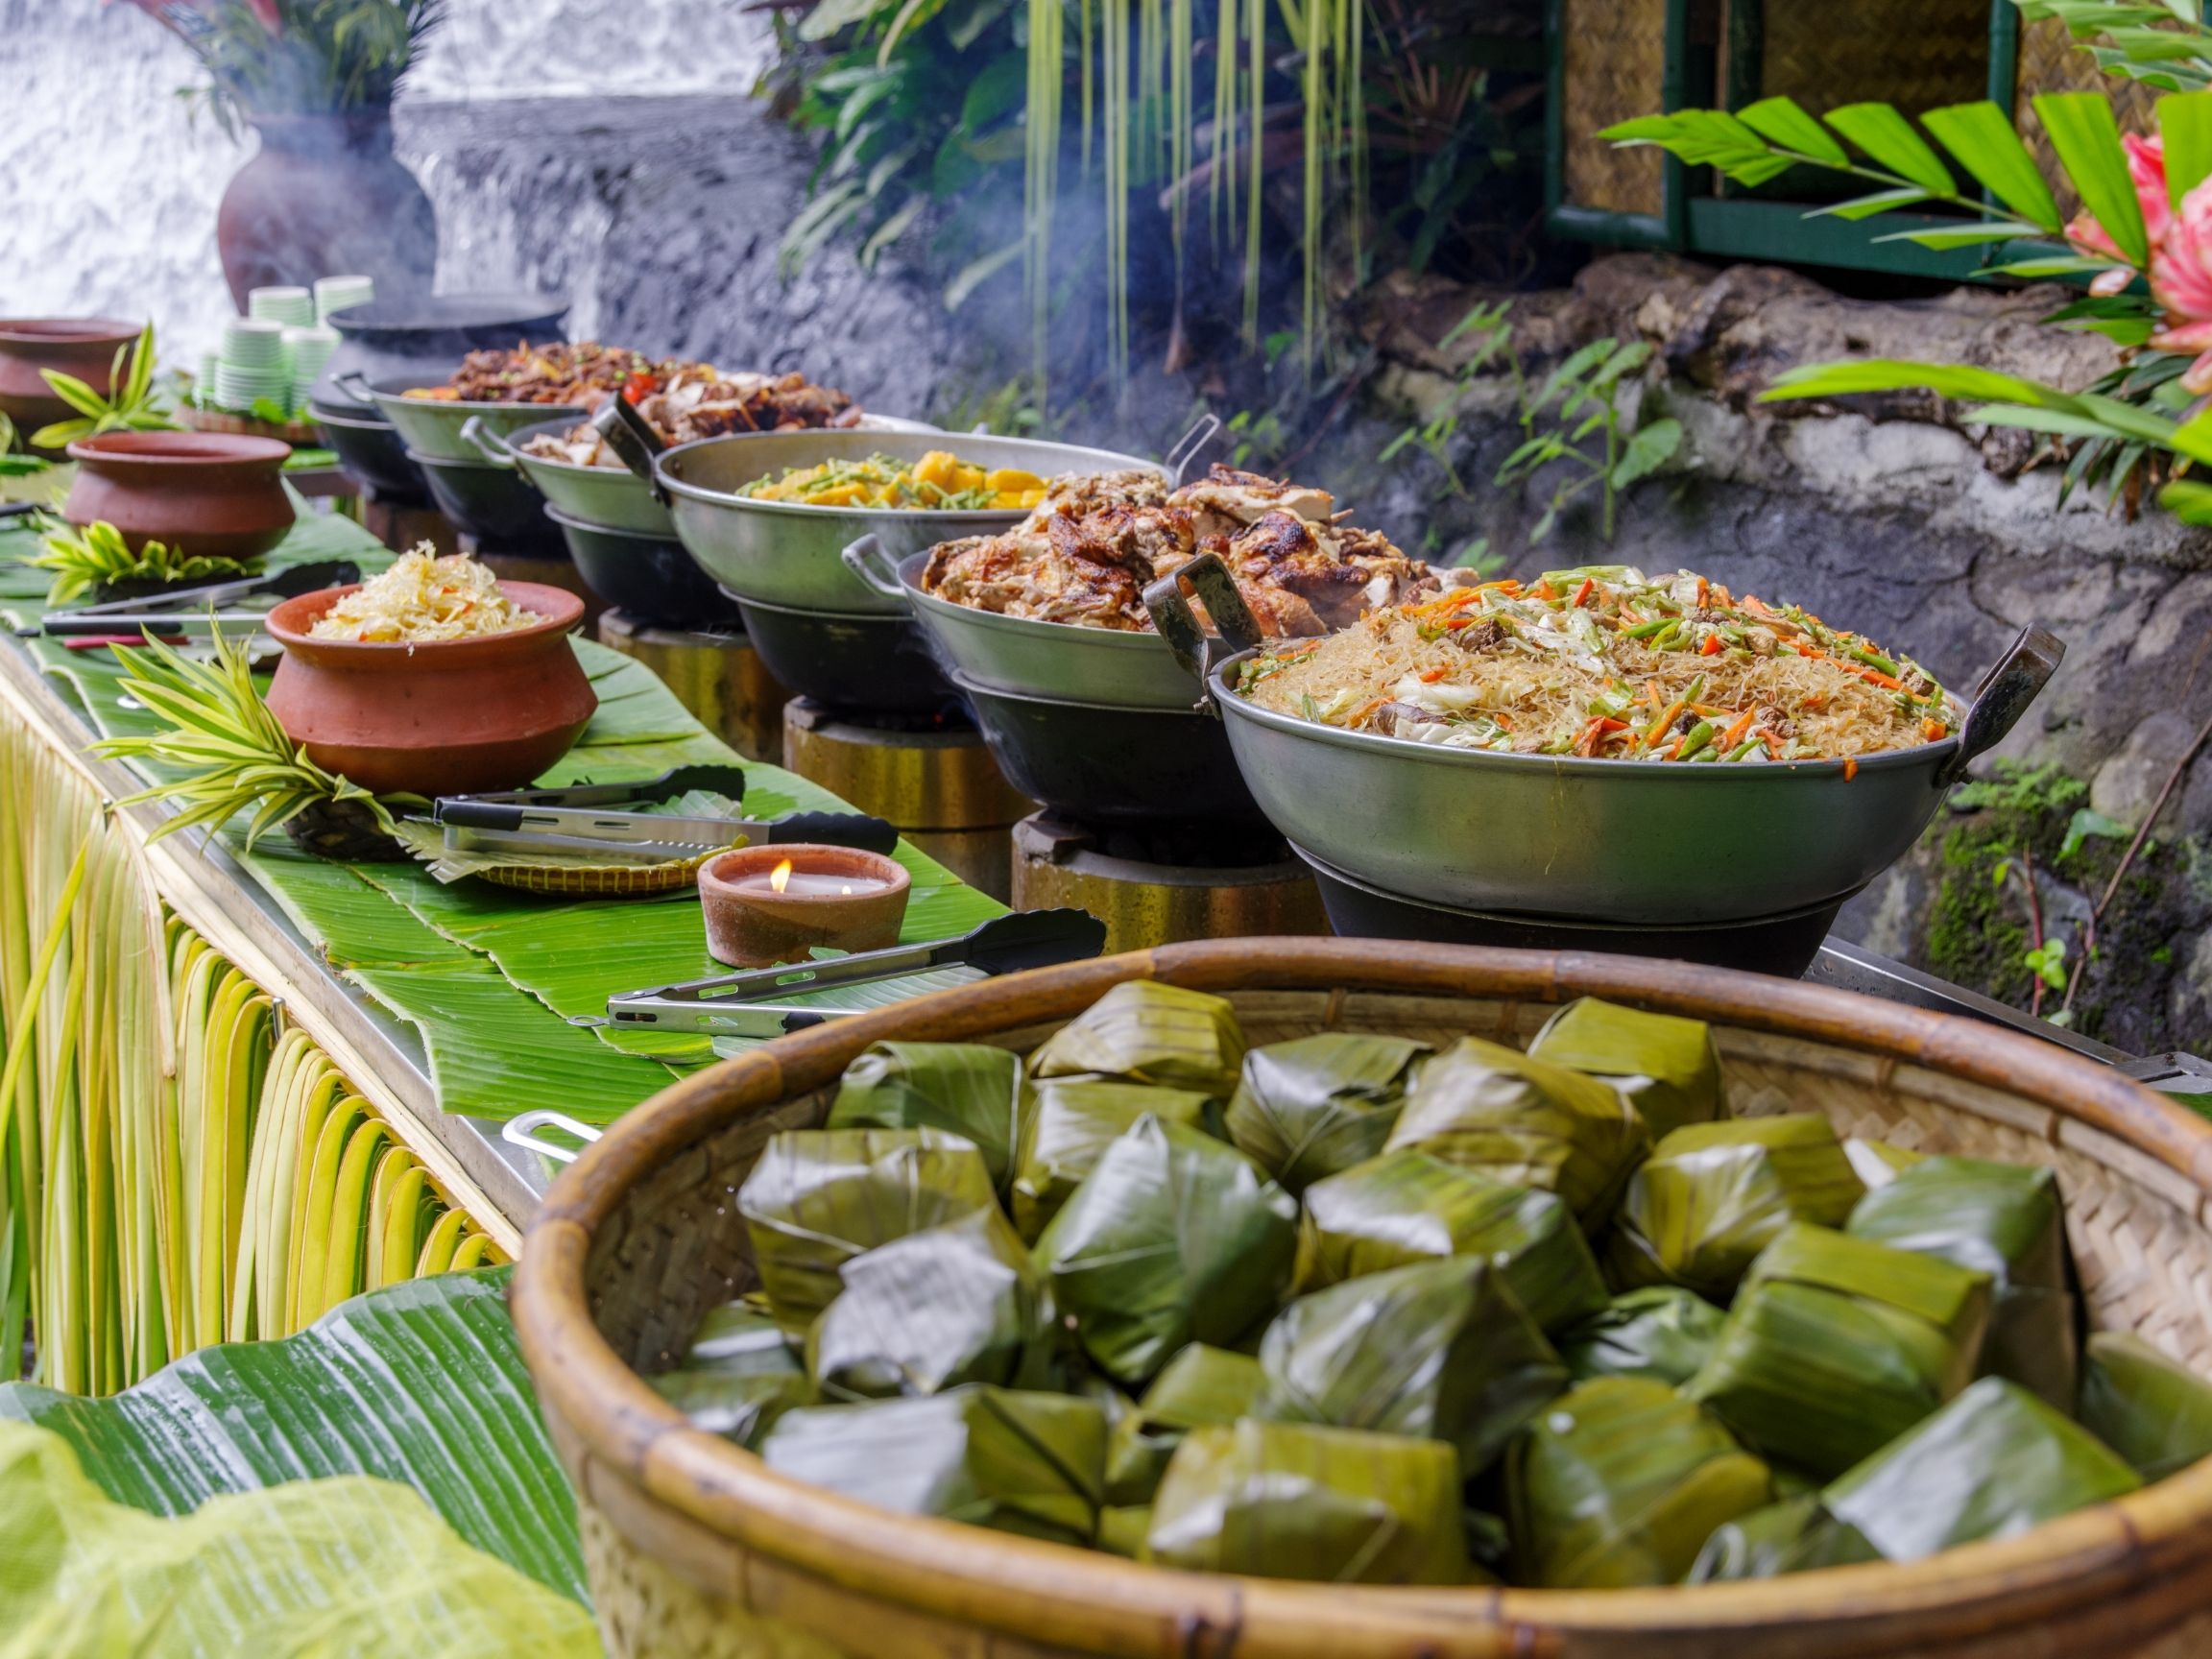 Filipino Cuisine: providing comfort across the globe